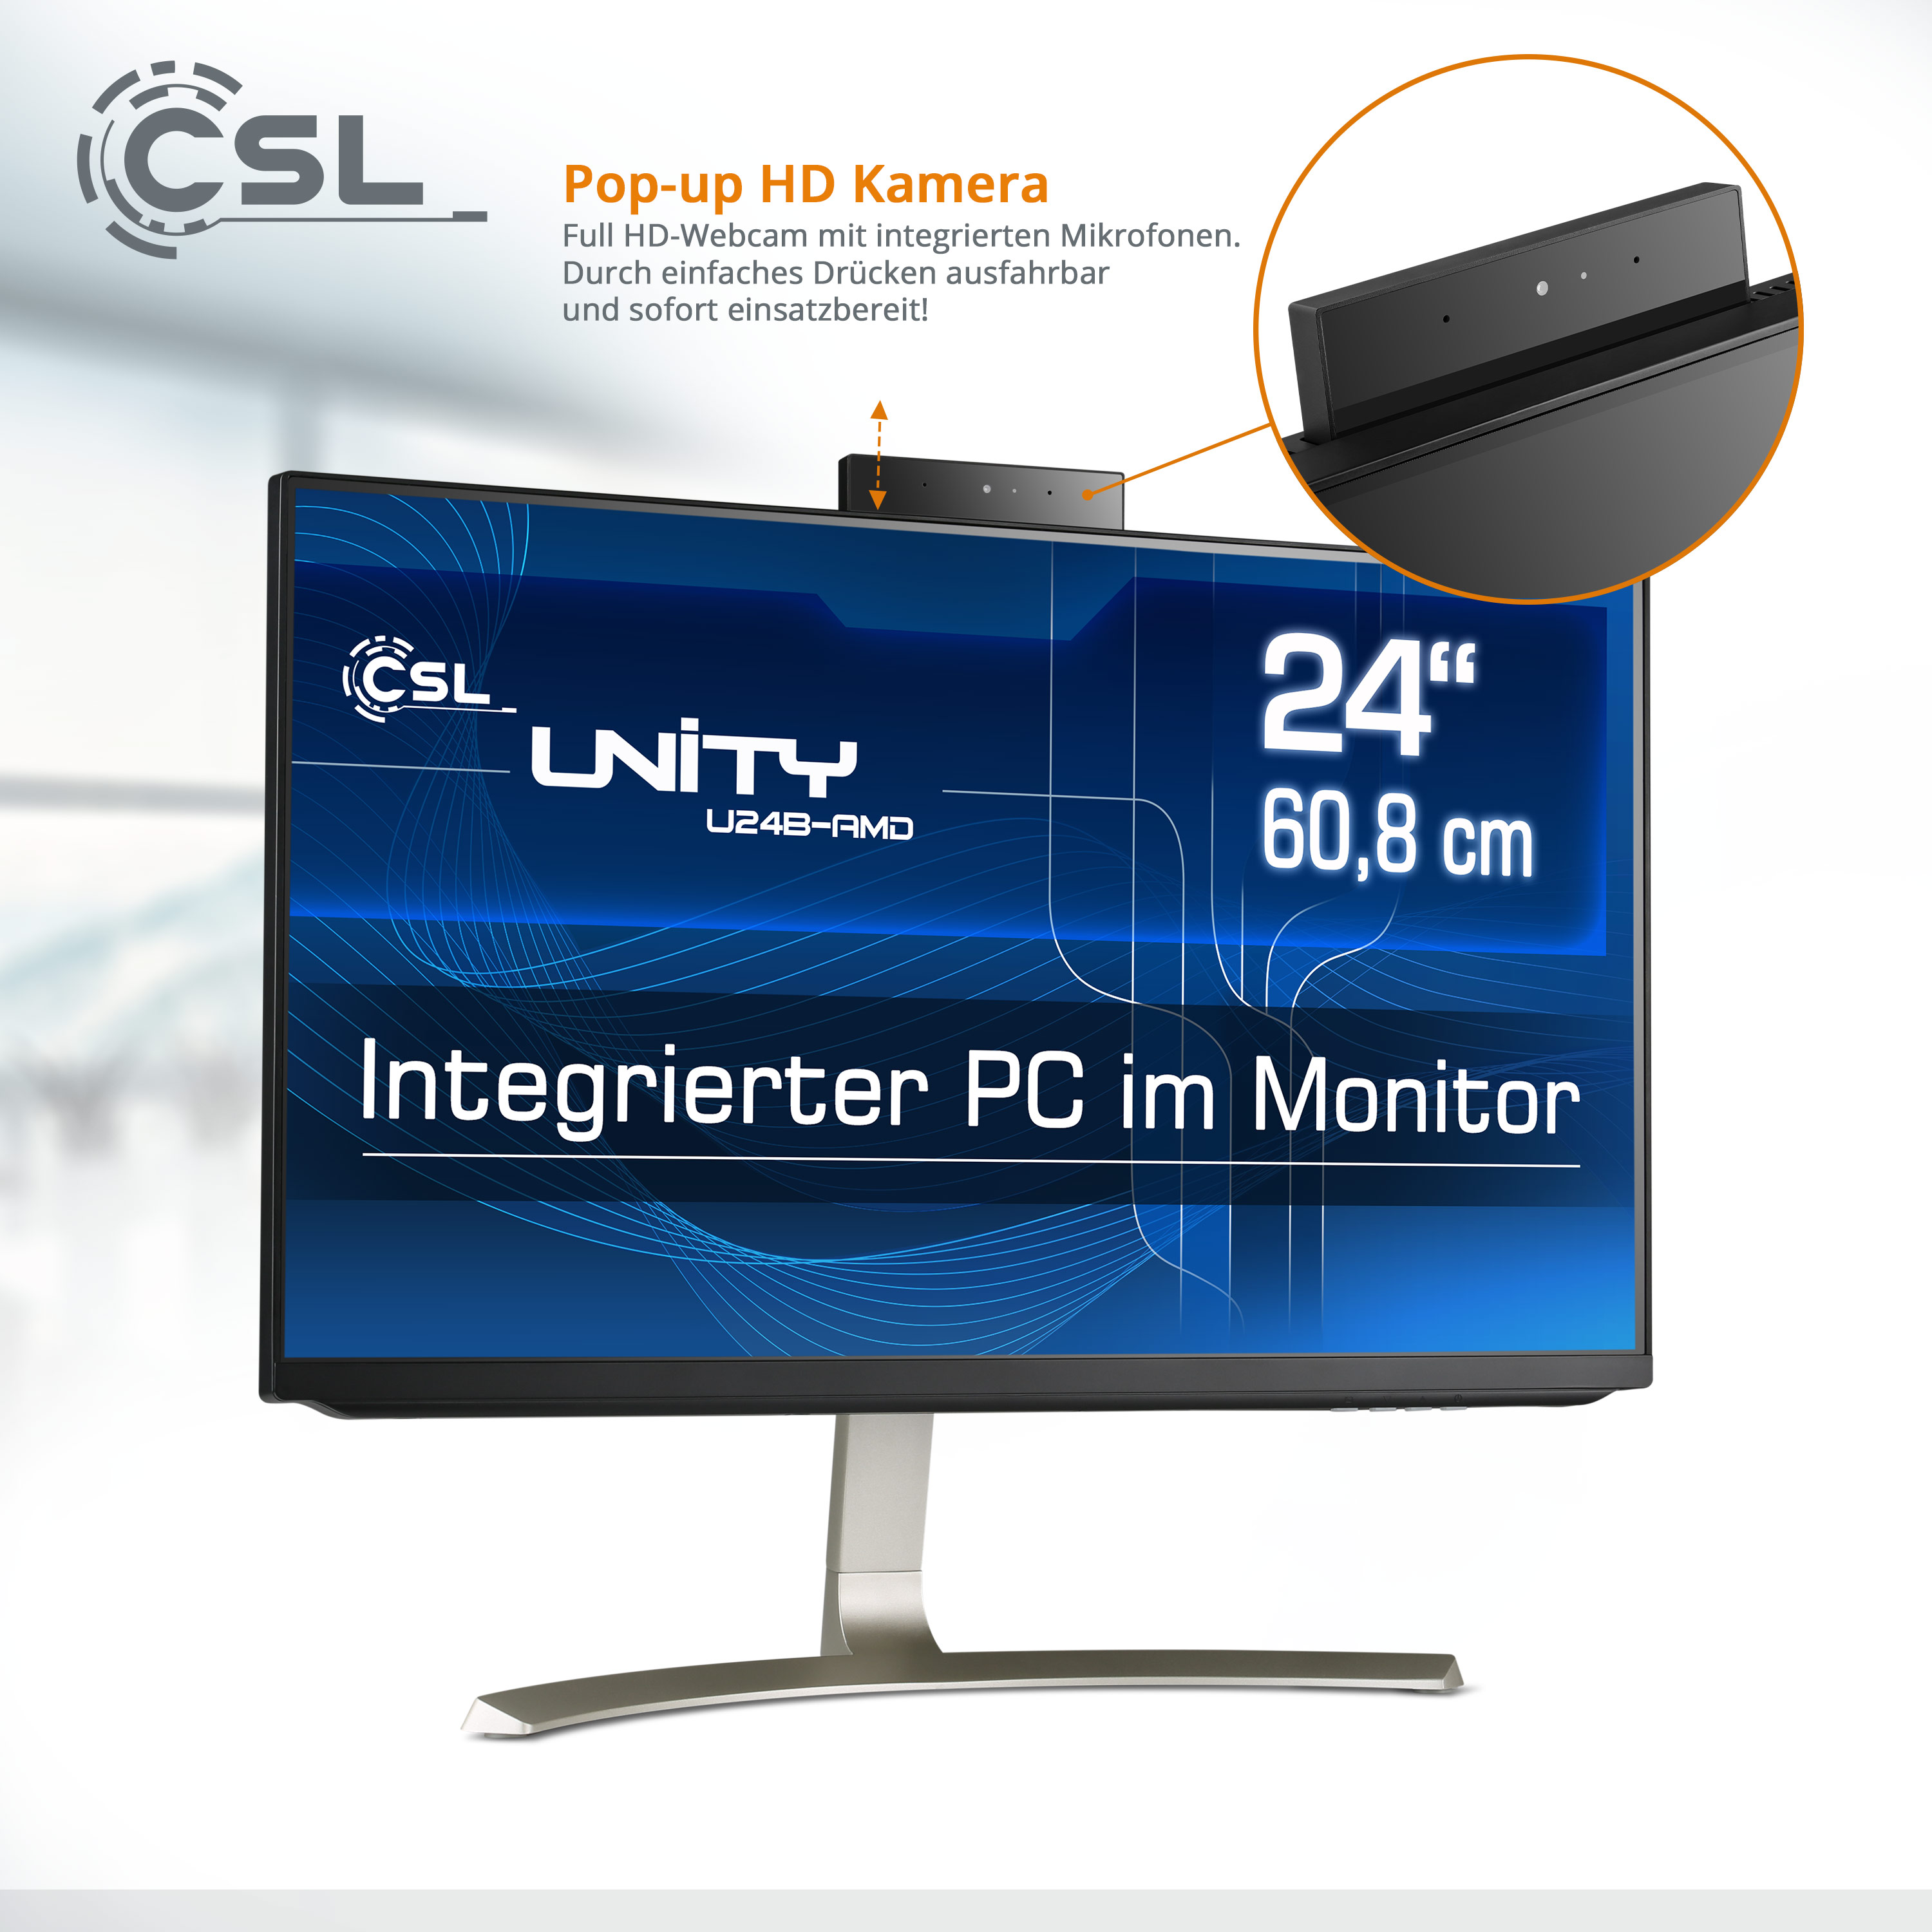 CSL Unity U24B-AMD MHz Radeon mit Win Graphics, 6x schwarz Zoll 1000 11 All-in-One-PC / GB AMD 3400 16 Display, SSD, 24 Home, RAM, GB 5650GE